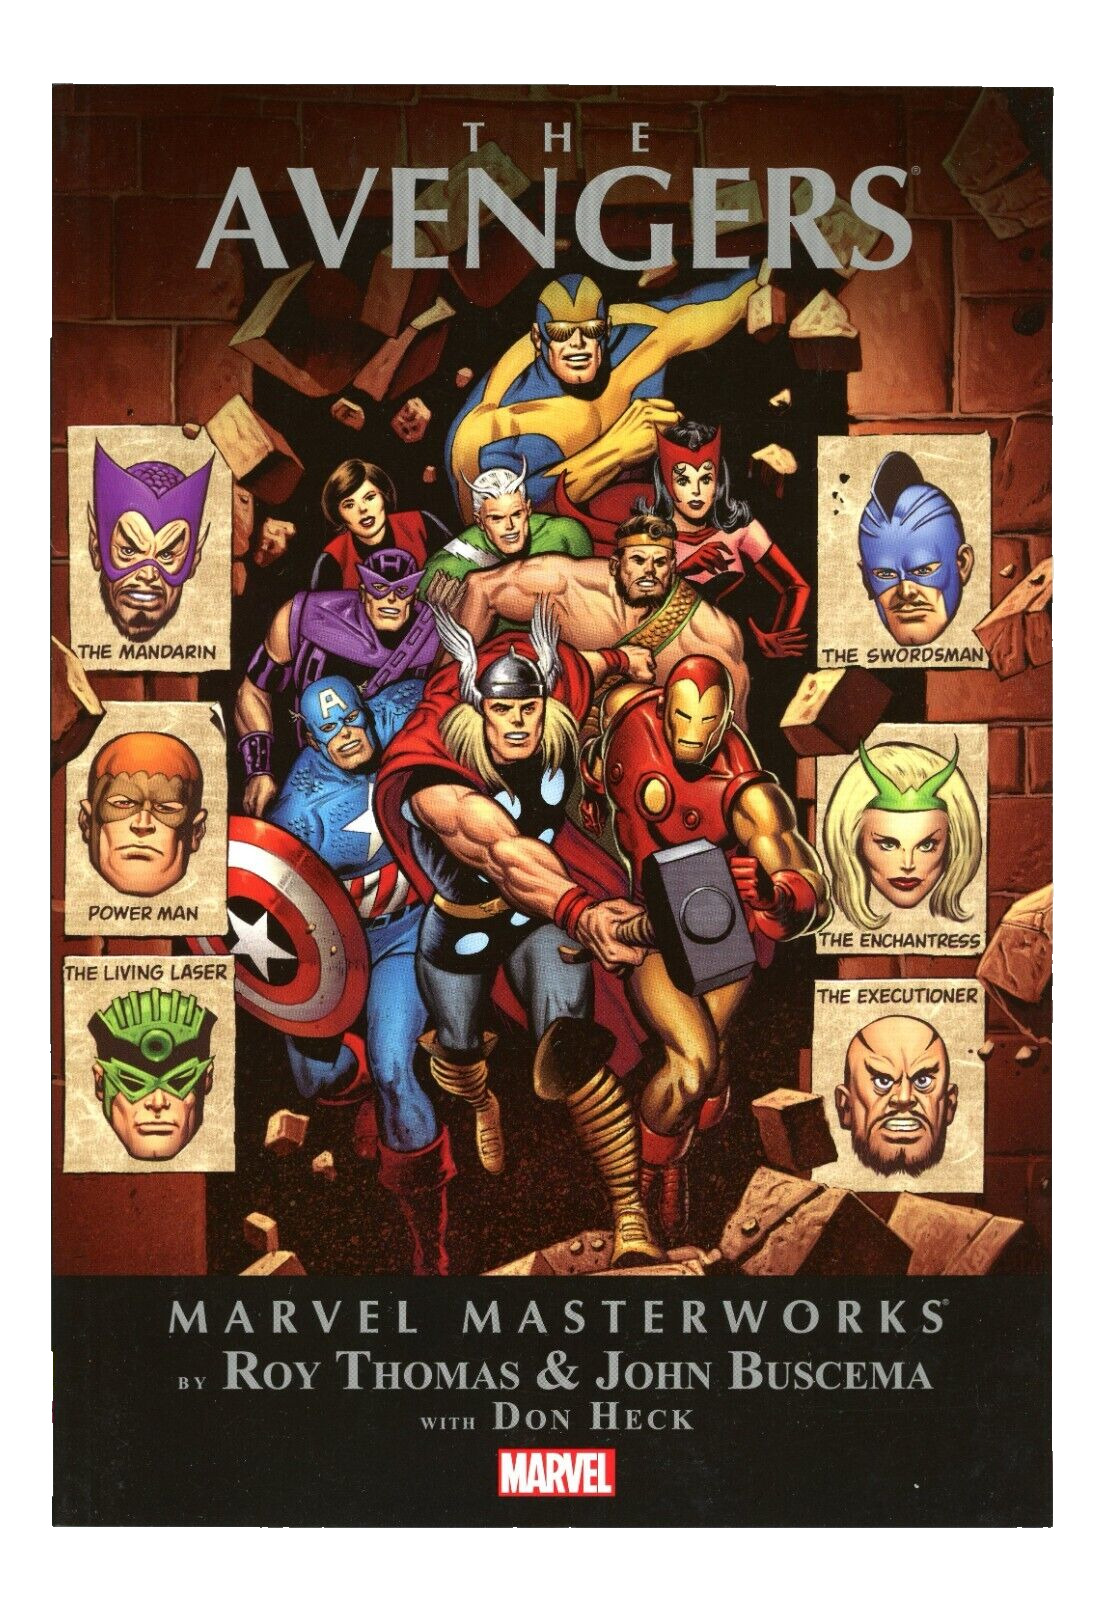 Marvel Masterworks The Avengers Vol 5 TPB Softcover